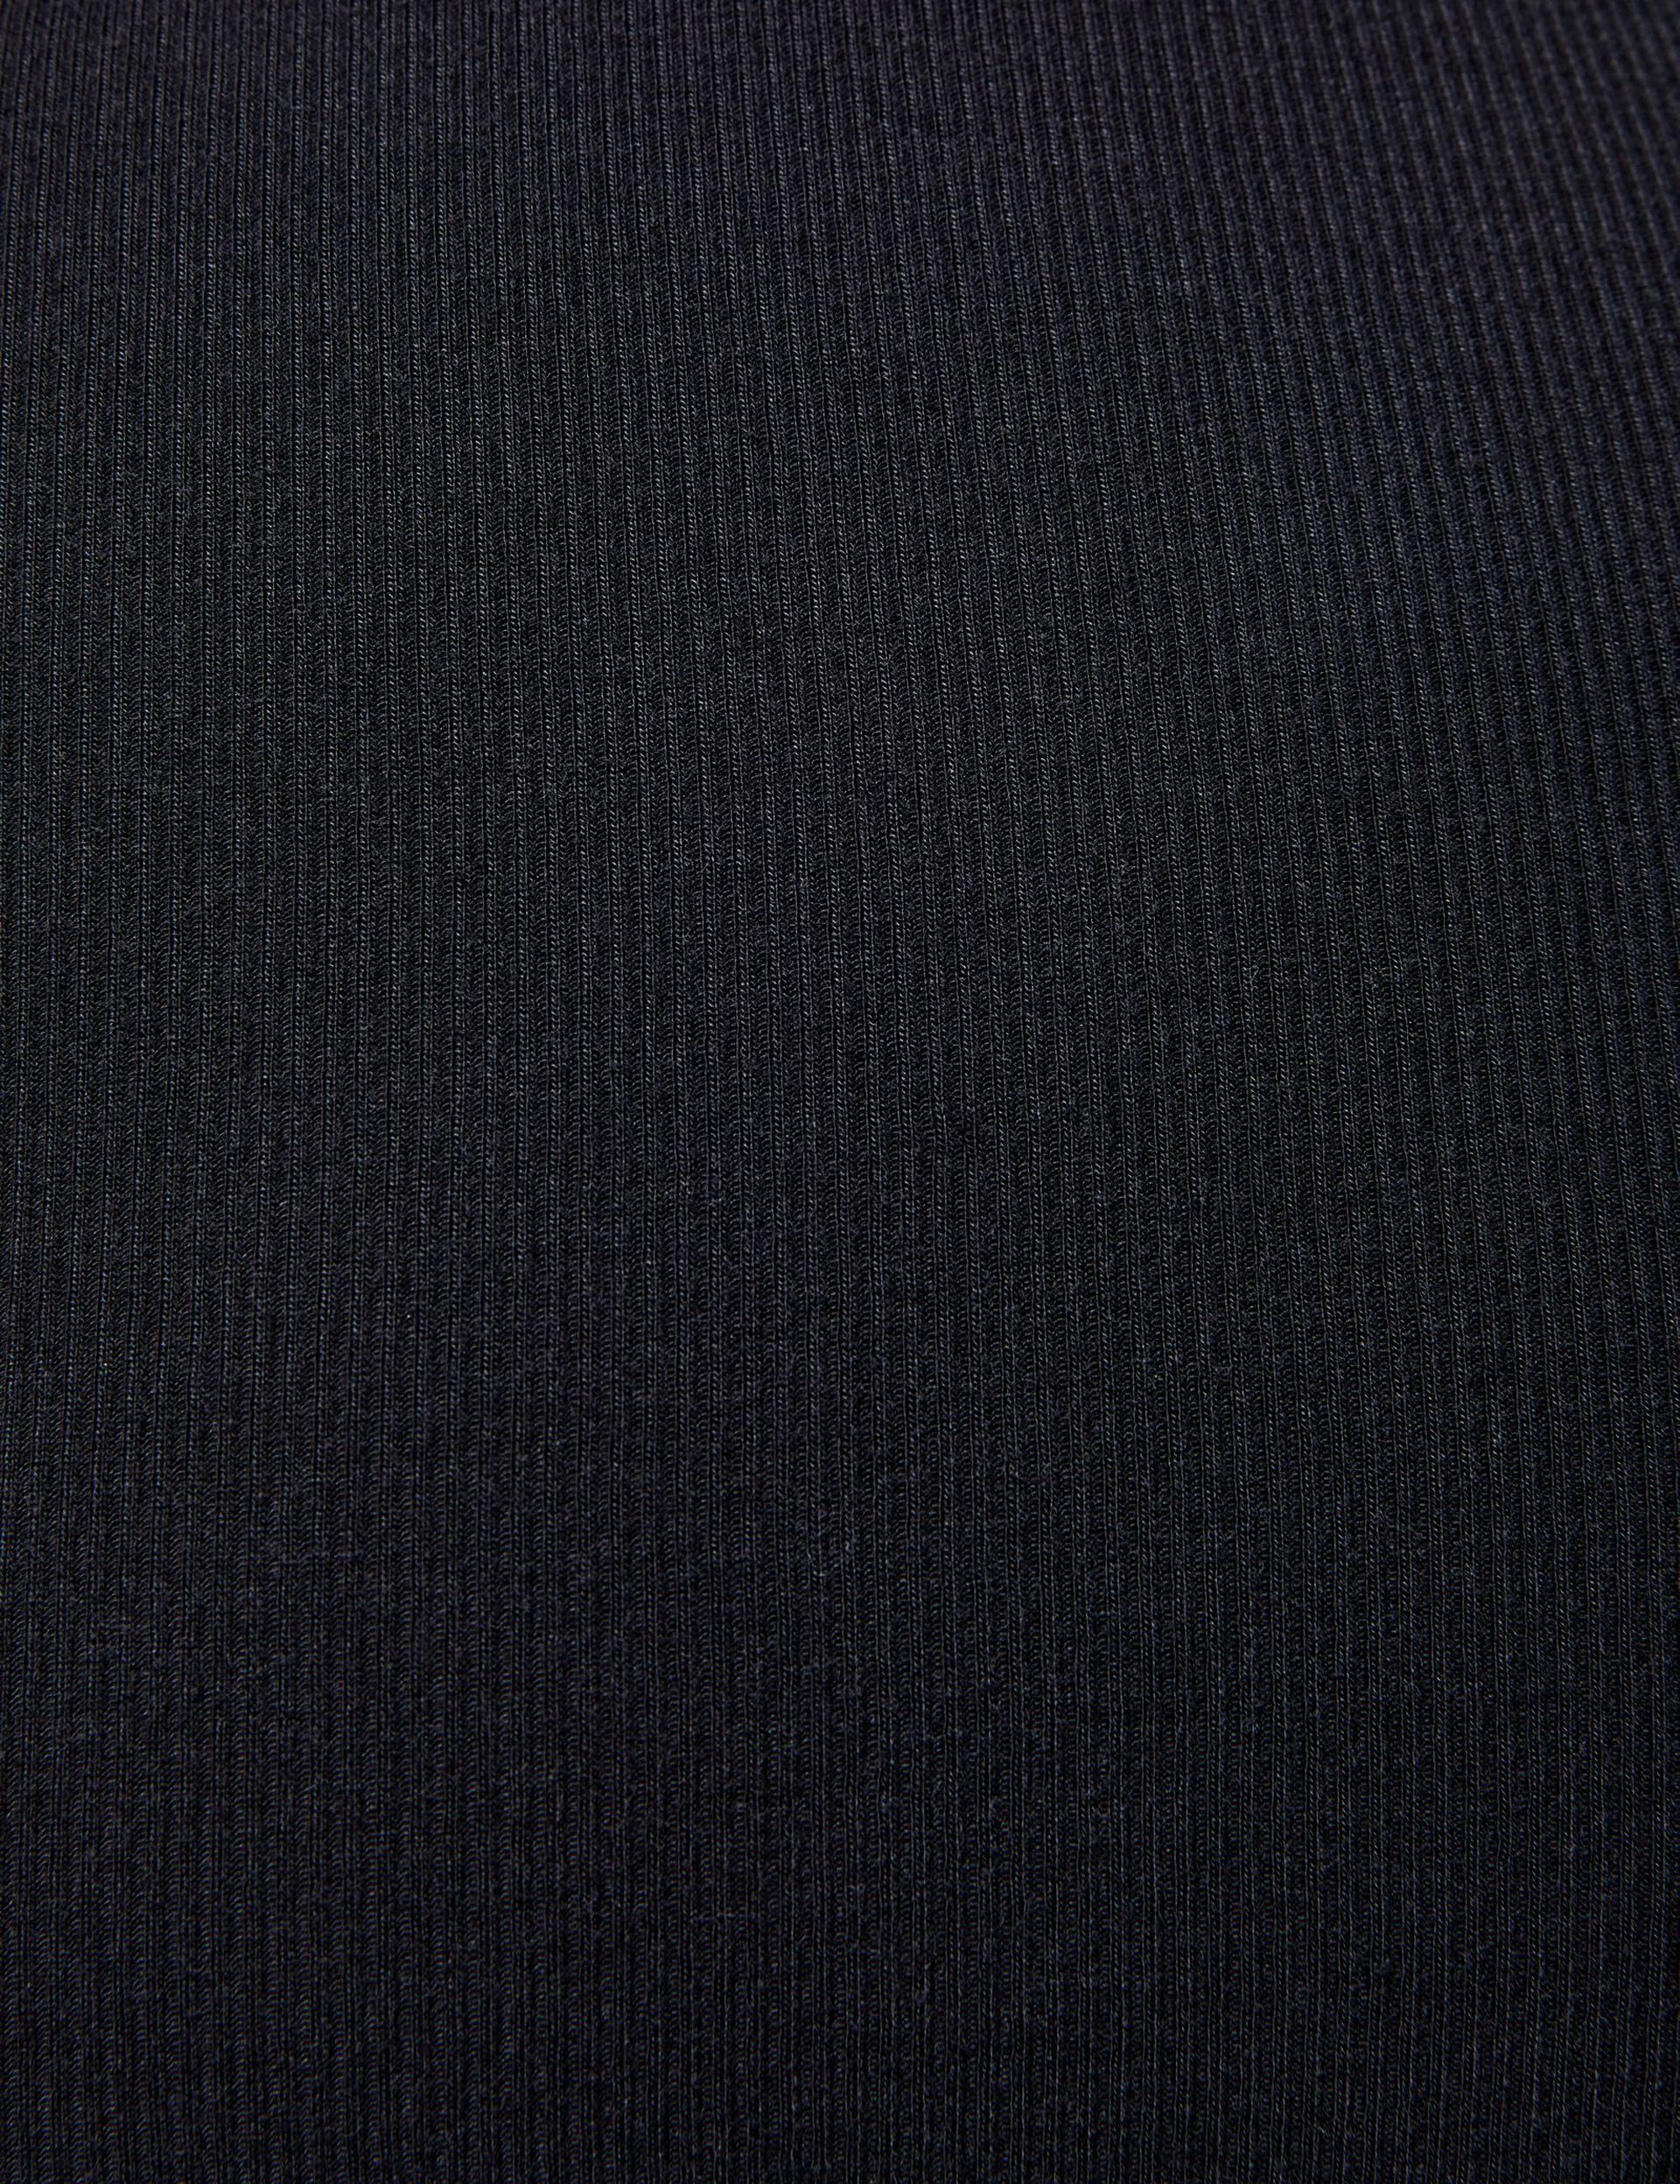 Tee-shirt noir côtelé avec liens